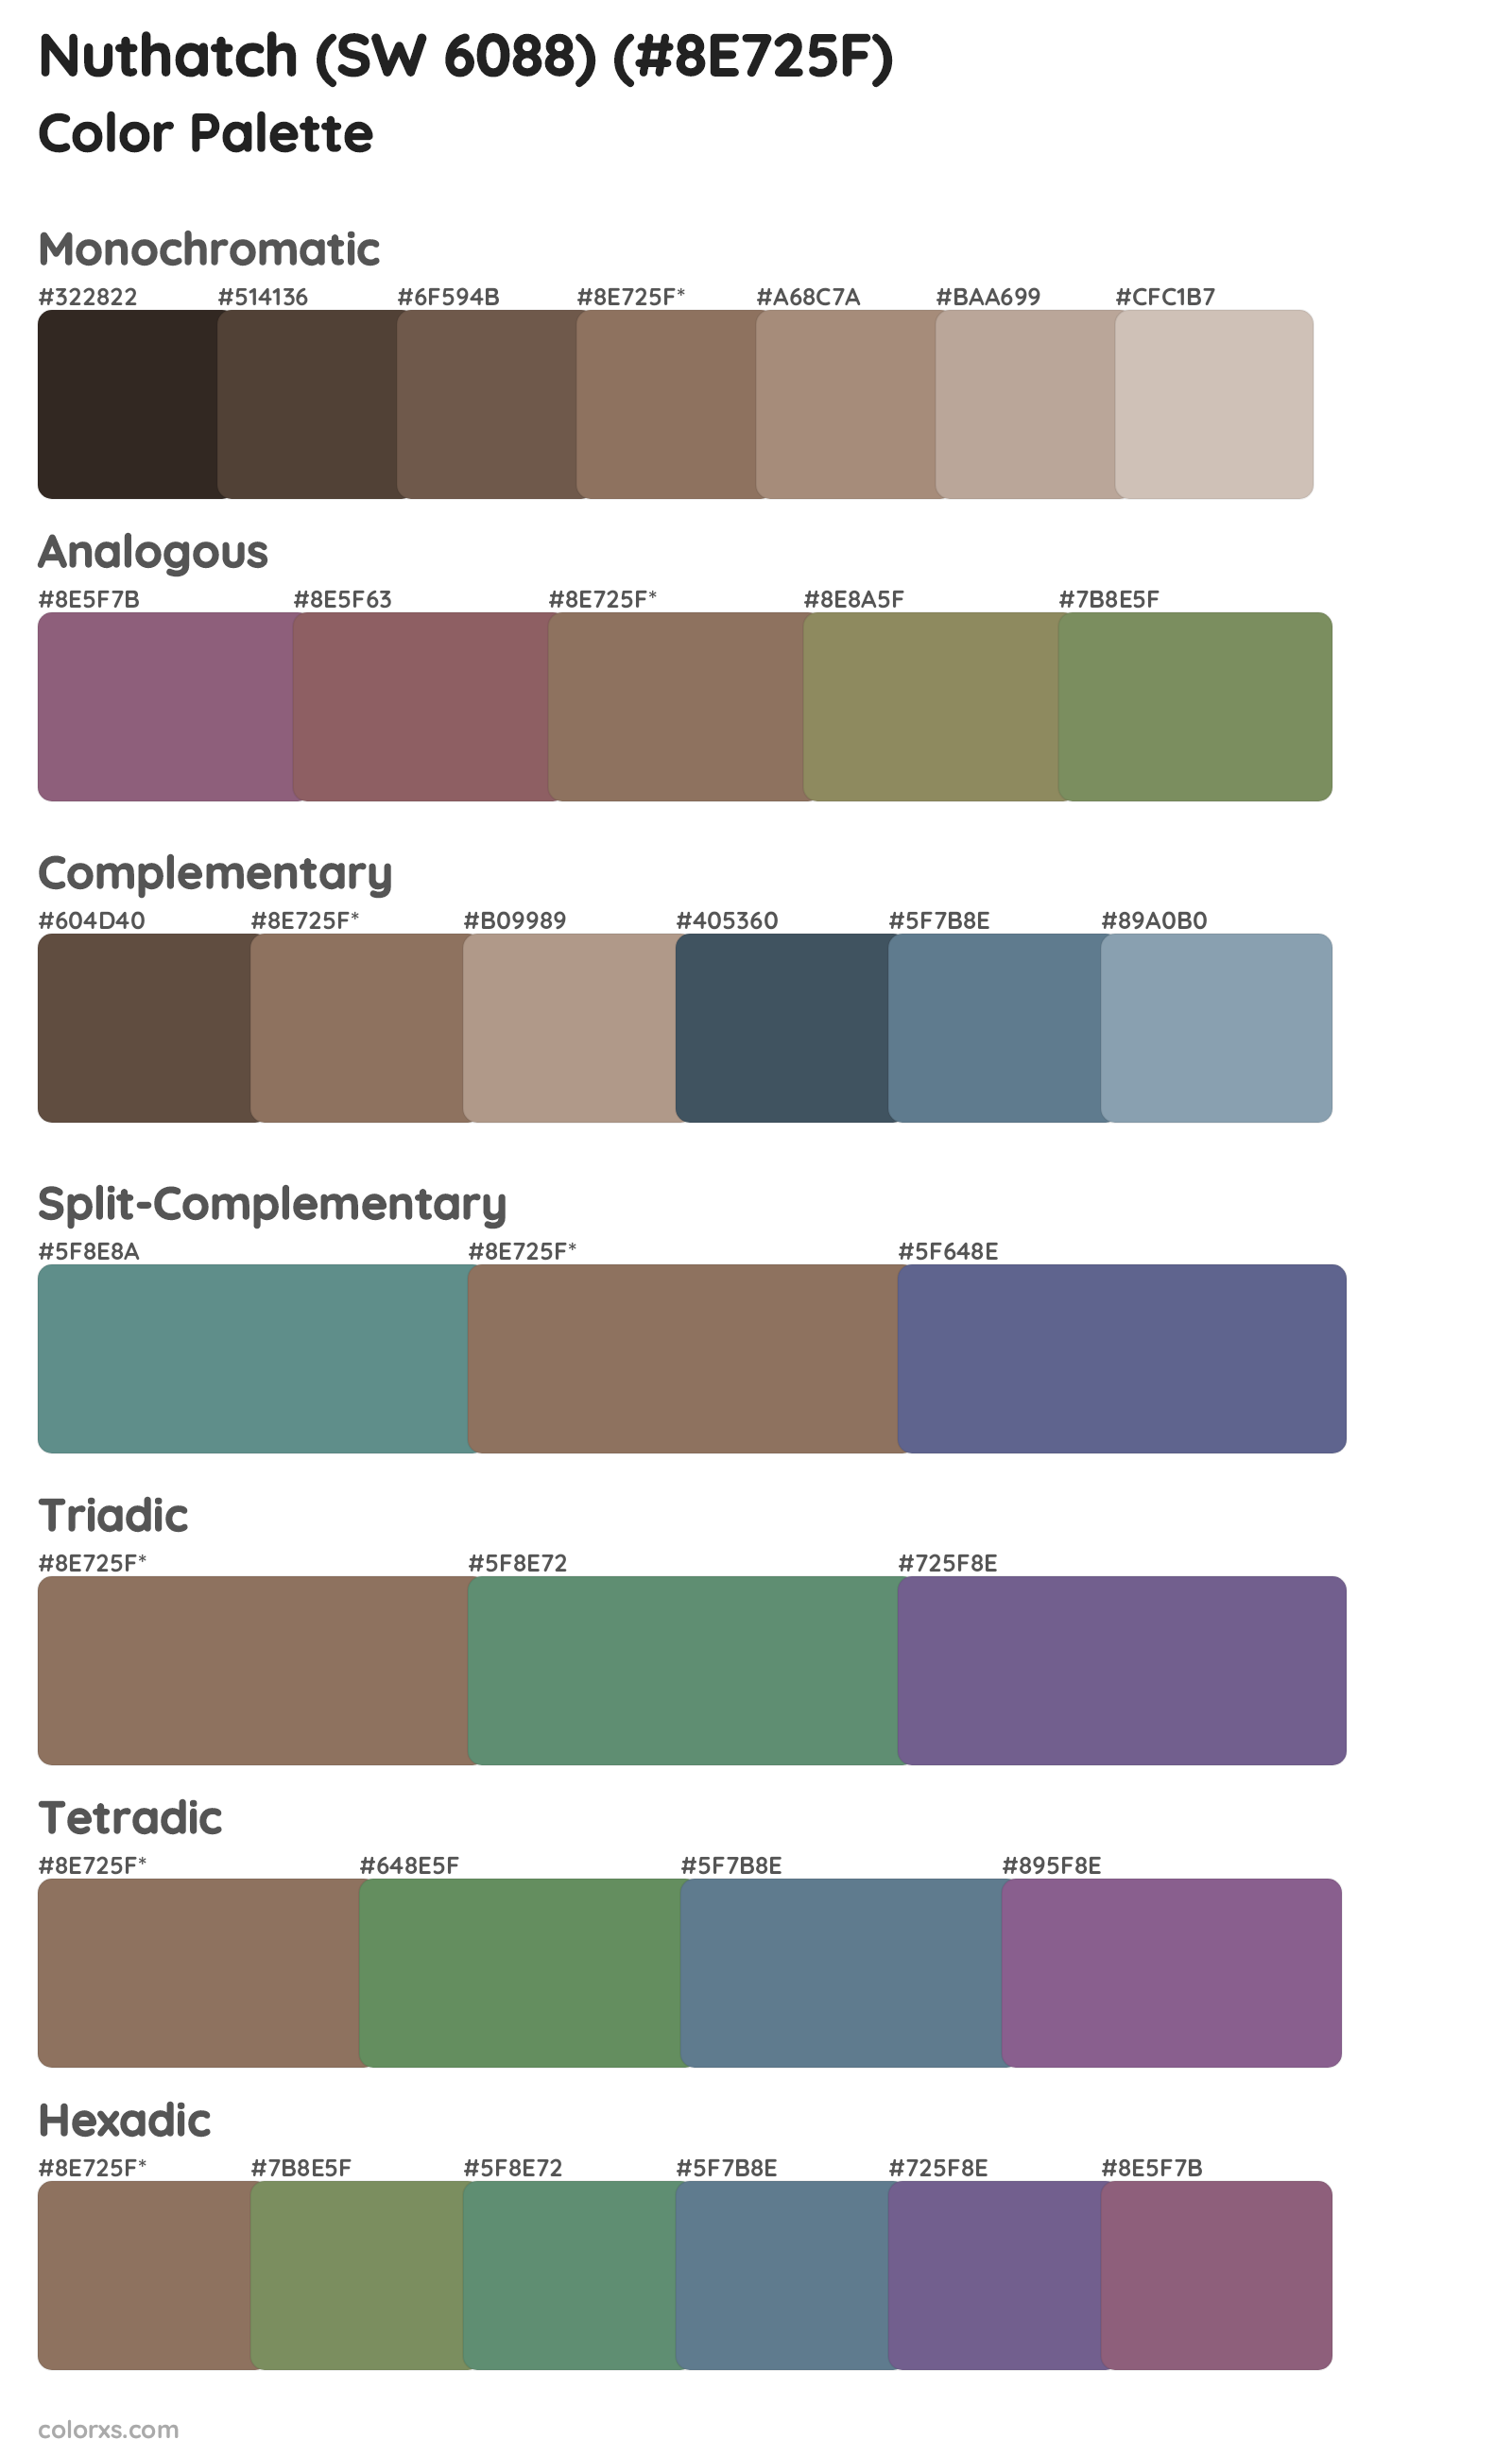 Nuthatch (SW 6088) Color Scheme Palettes